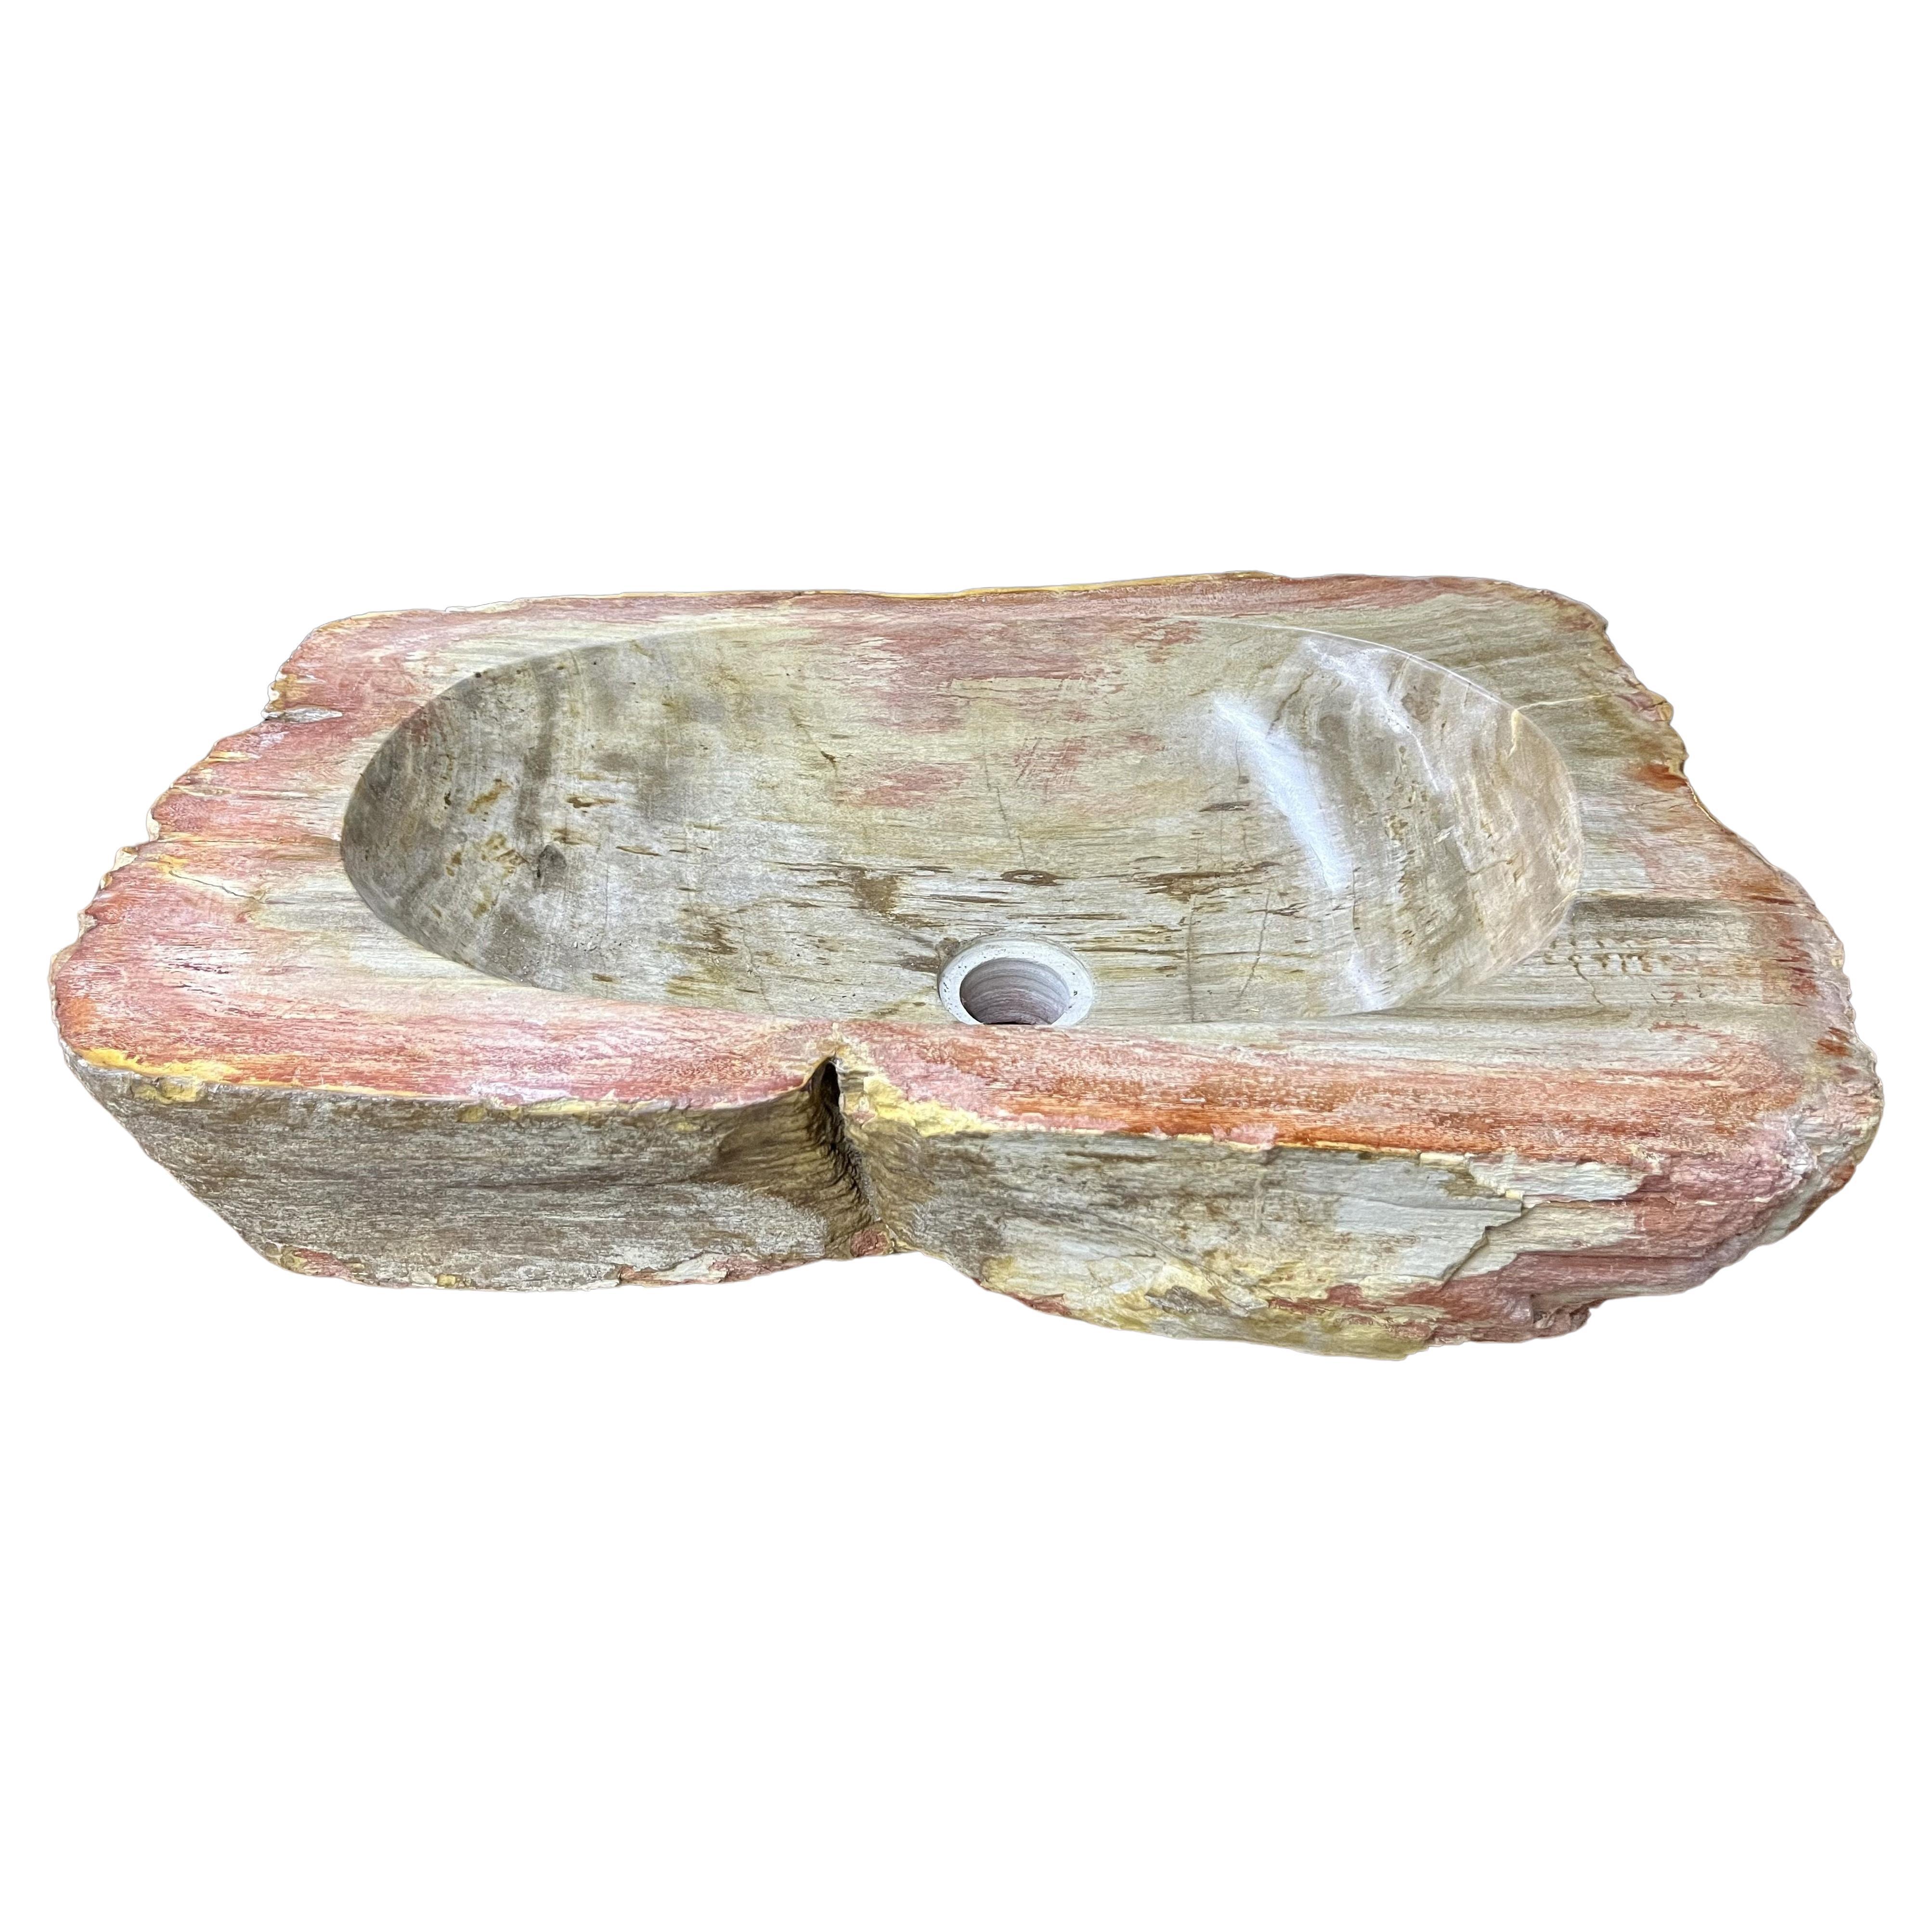 Petrified Wood Sink in Beige / Grey / Red / Yellow Tones, Organic Modern